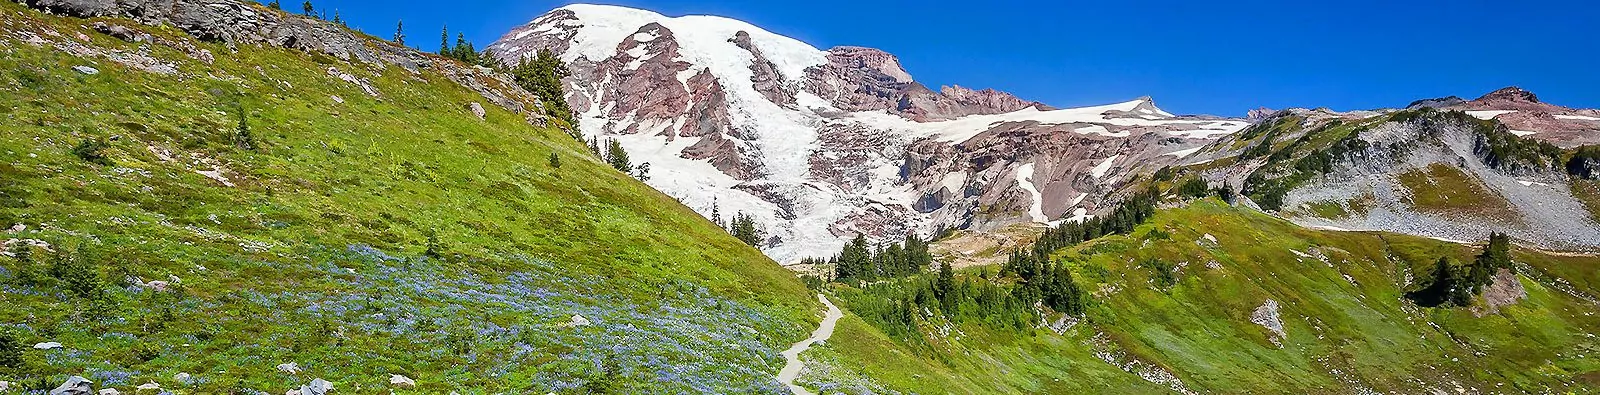 Hiking trail in Mount Rainier National Park